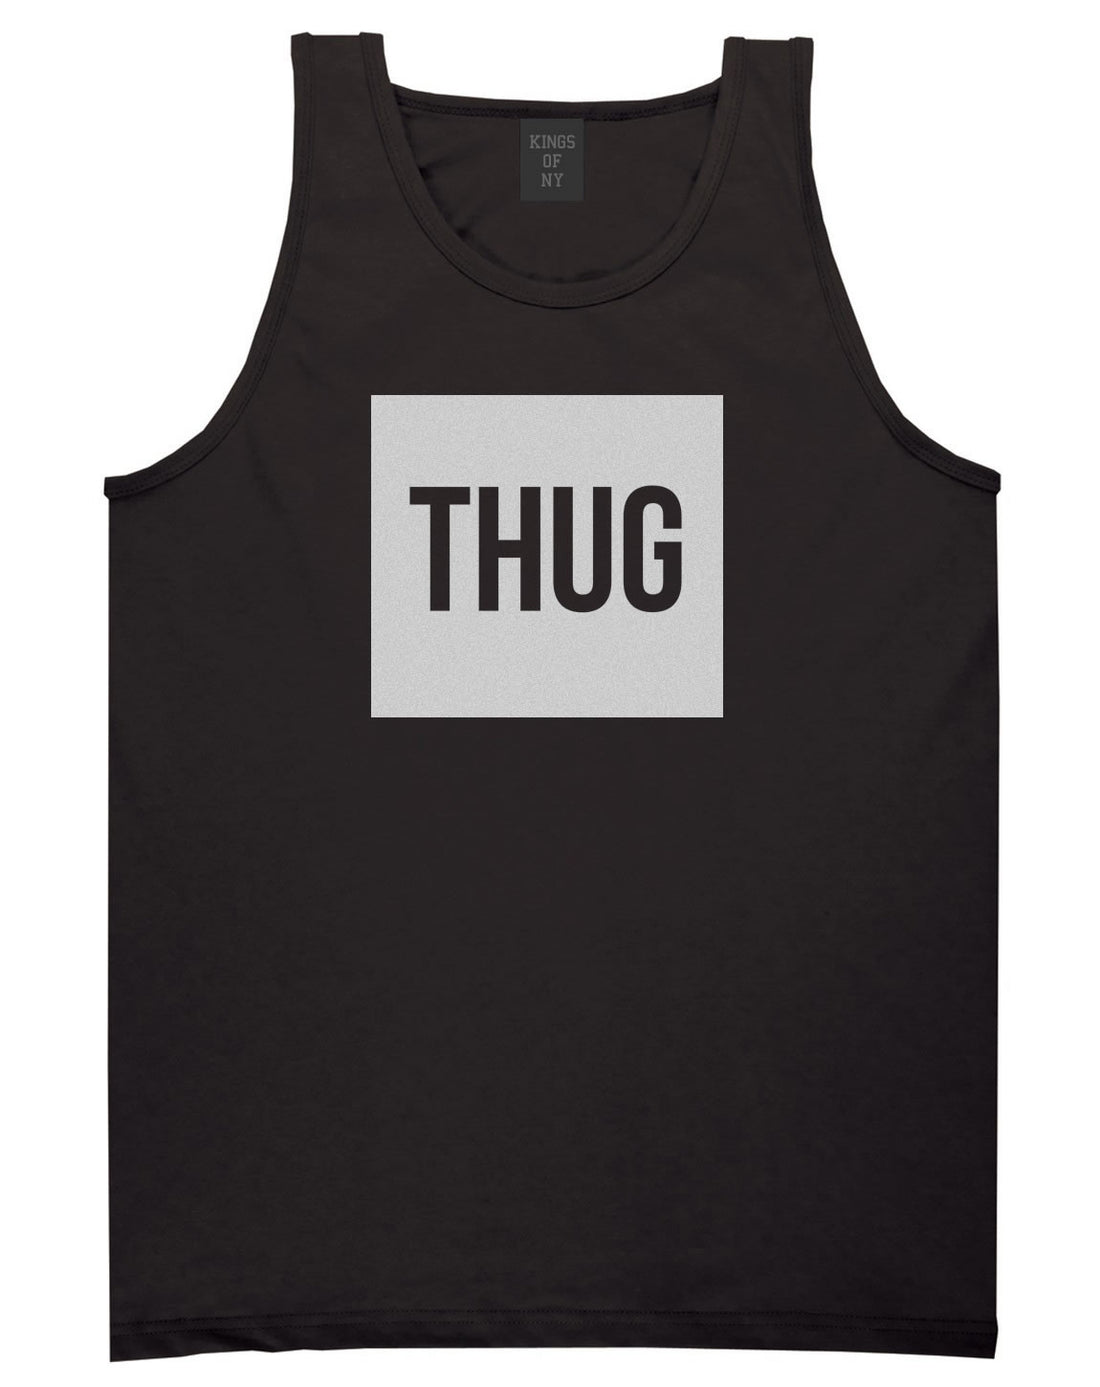 Thug Gangsta Box Logo Tank Top in Black by Kings Of NY